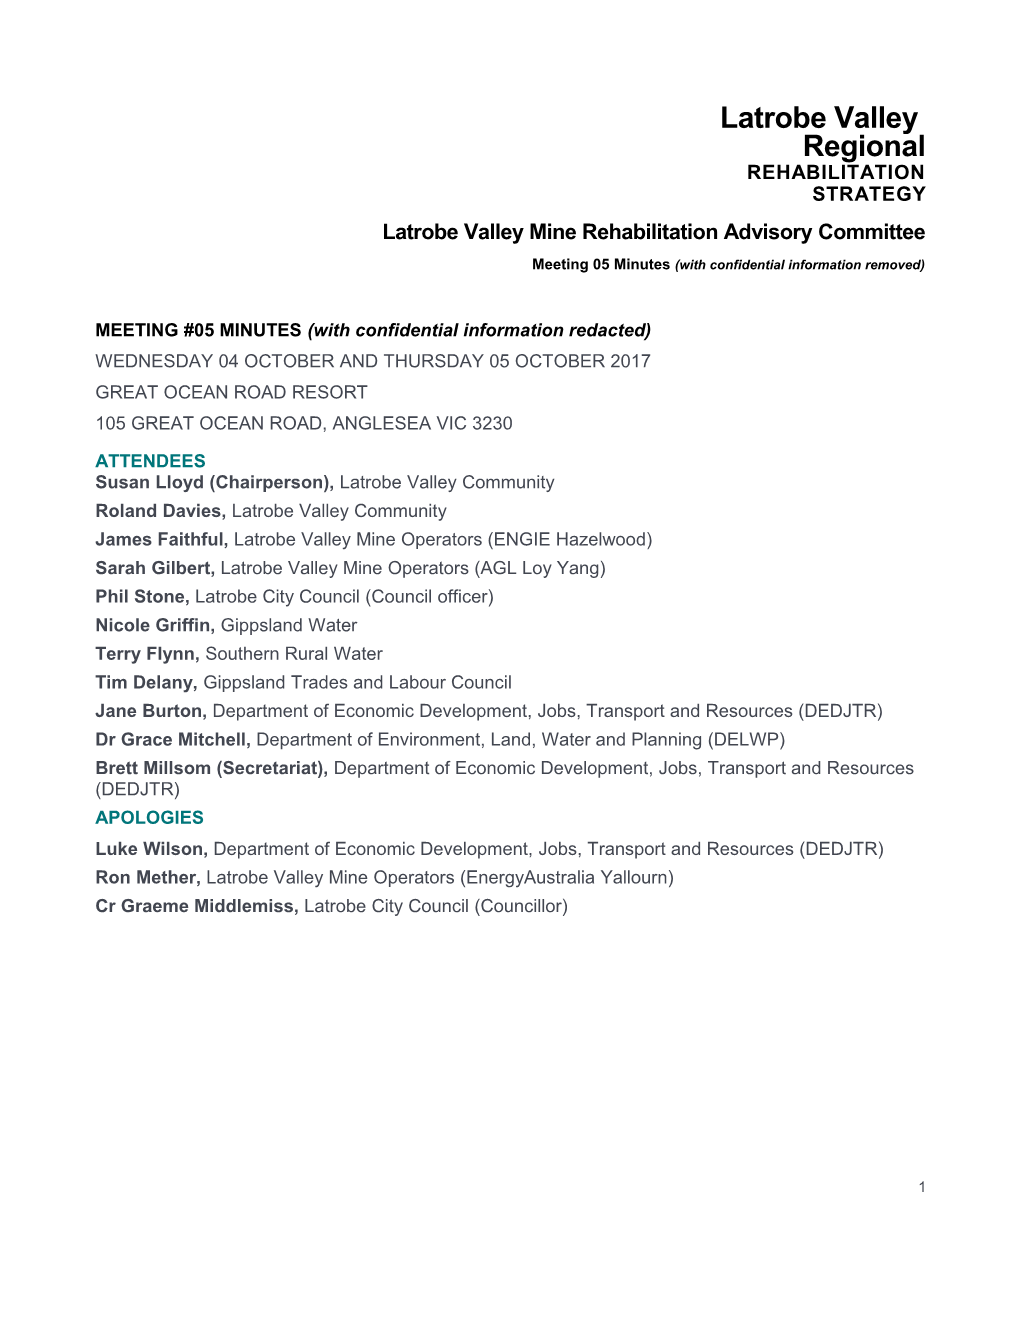 Latrobe Valley Mine Rehabilitation Advisory Committee